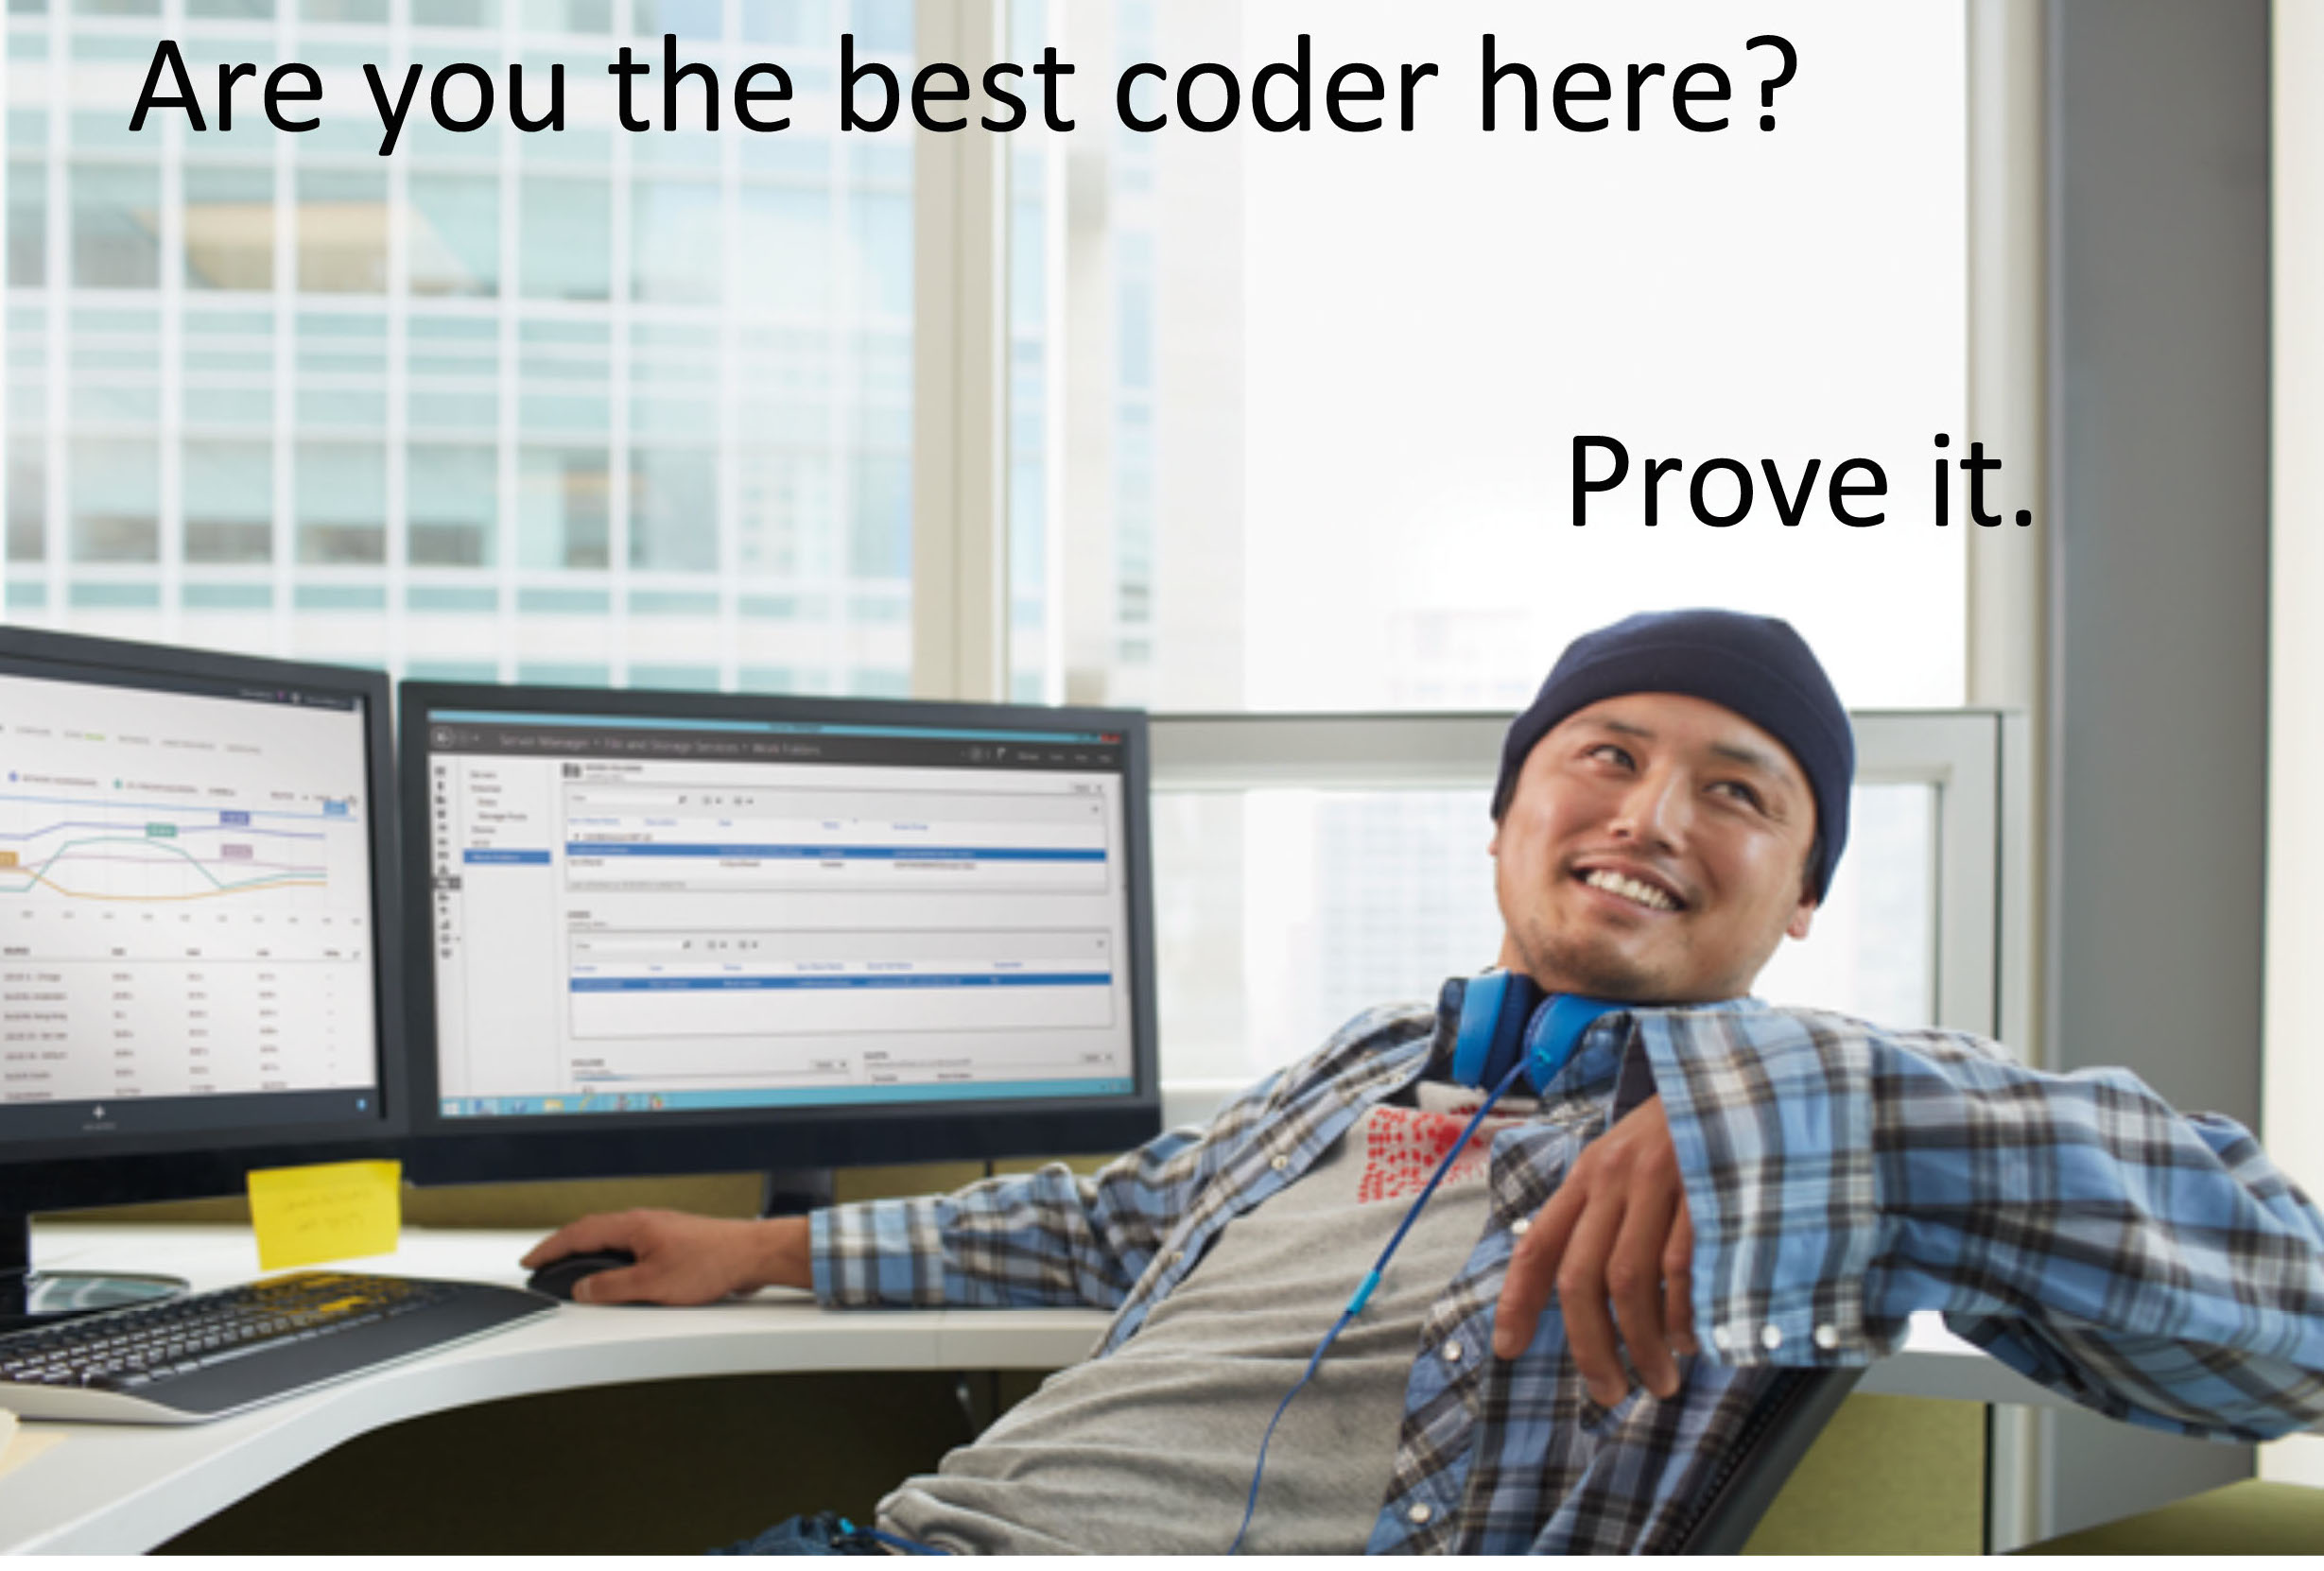 Microsoft College Coding Competition